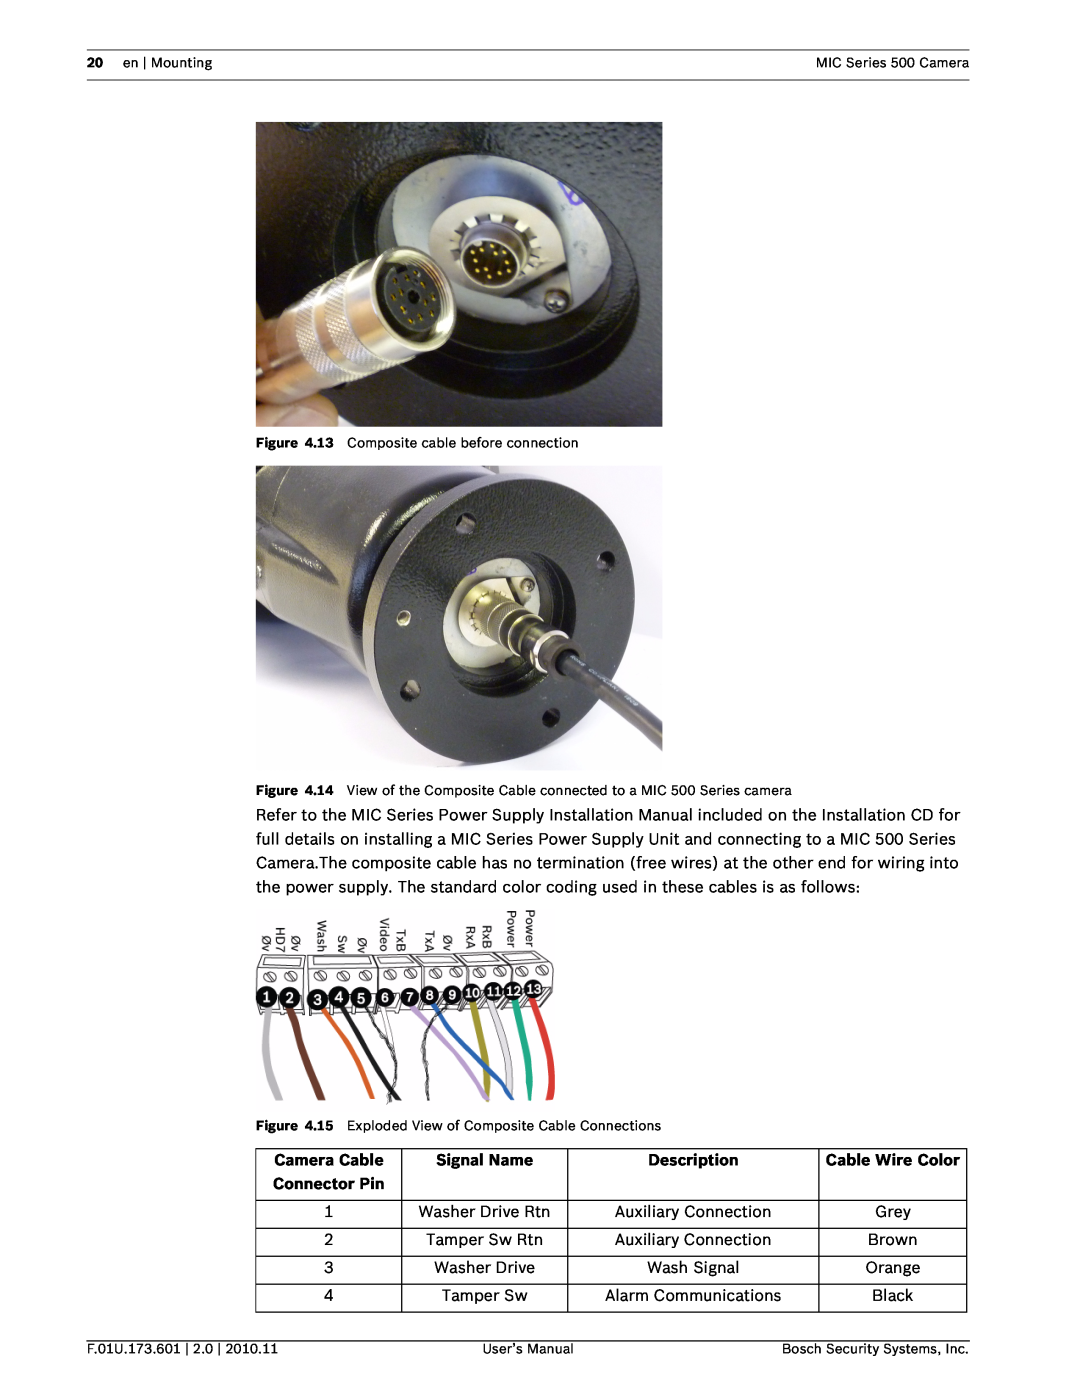 Bosch Appliances 500 user manual Camera Cable, Signal Name, Cable Wire Color, Connector Pin, Description 